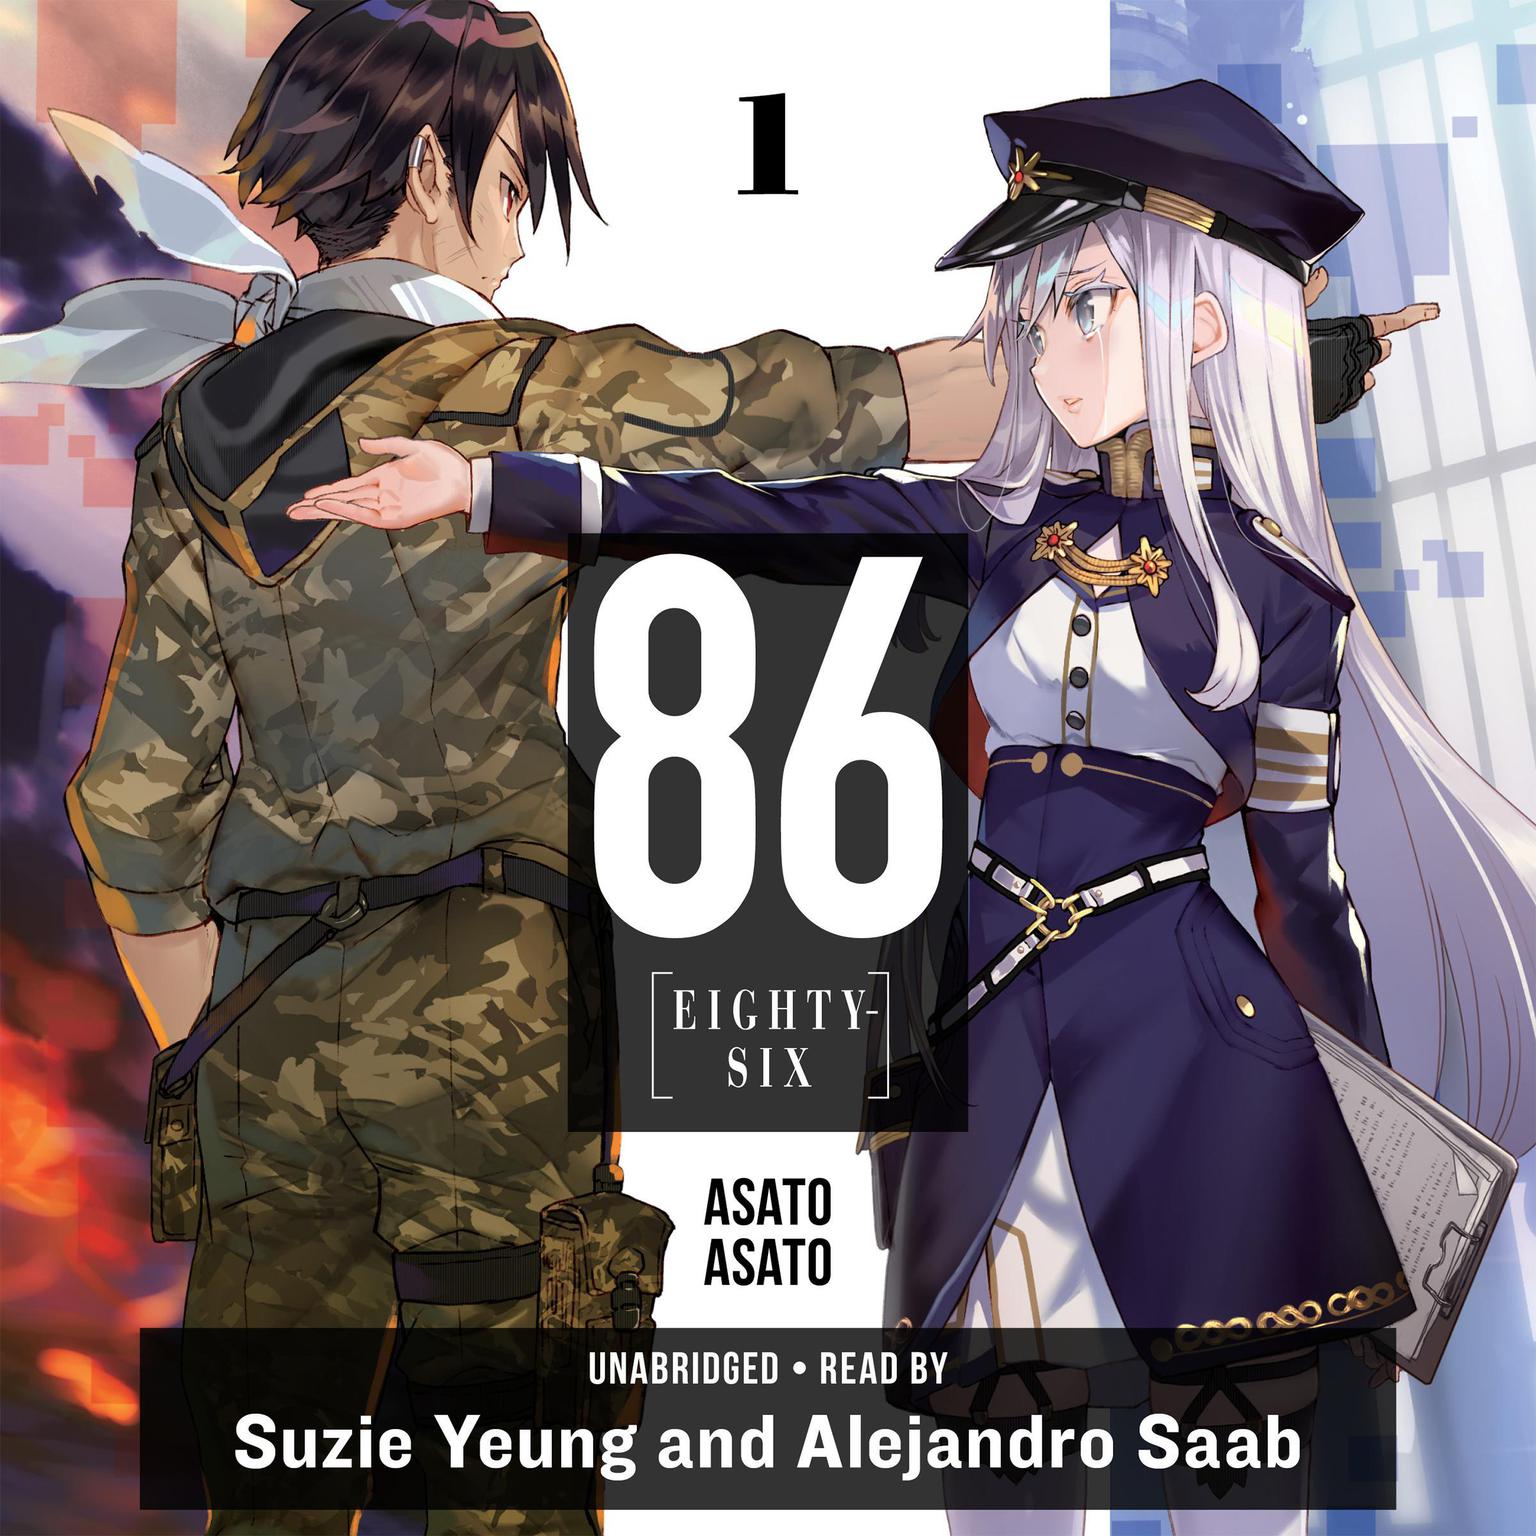 86--Eighty-Six Volume 1 Manga Discussion & Light Novel Comparison